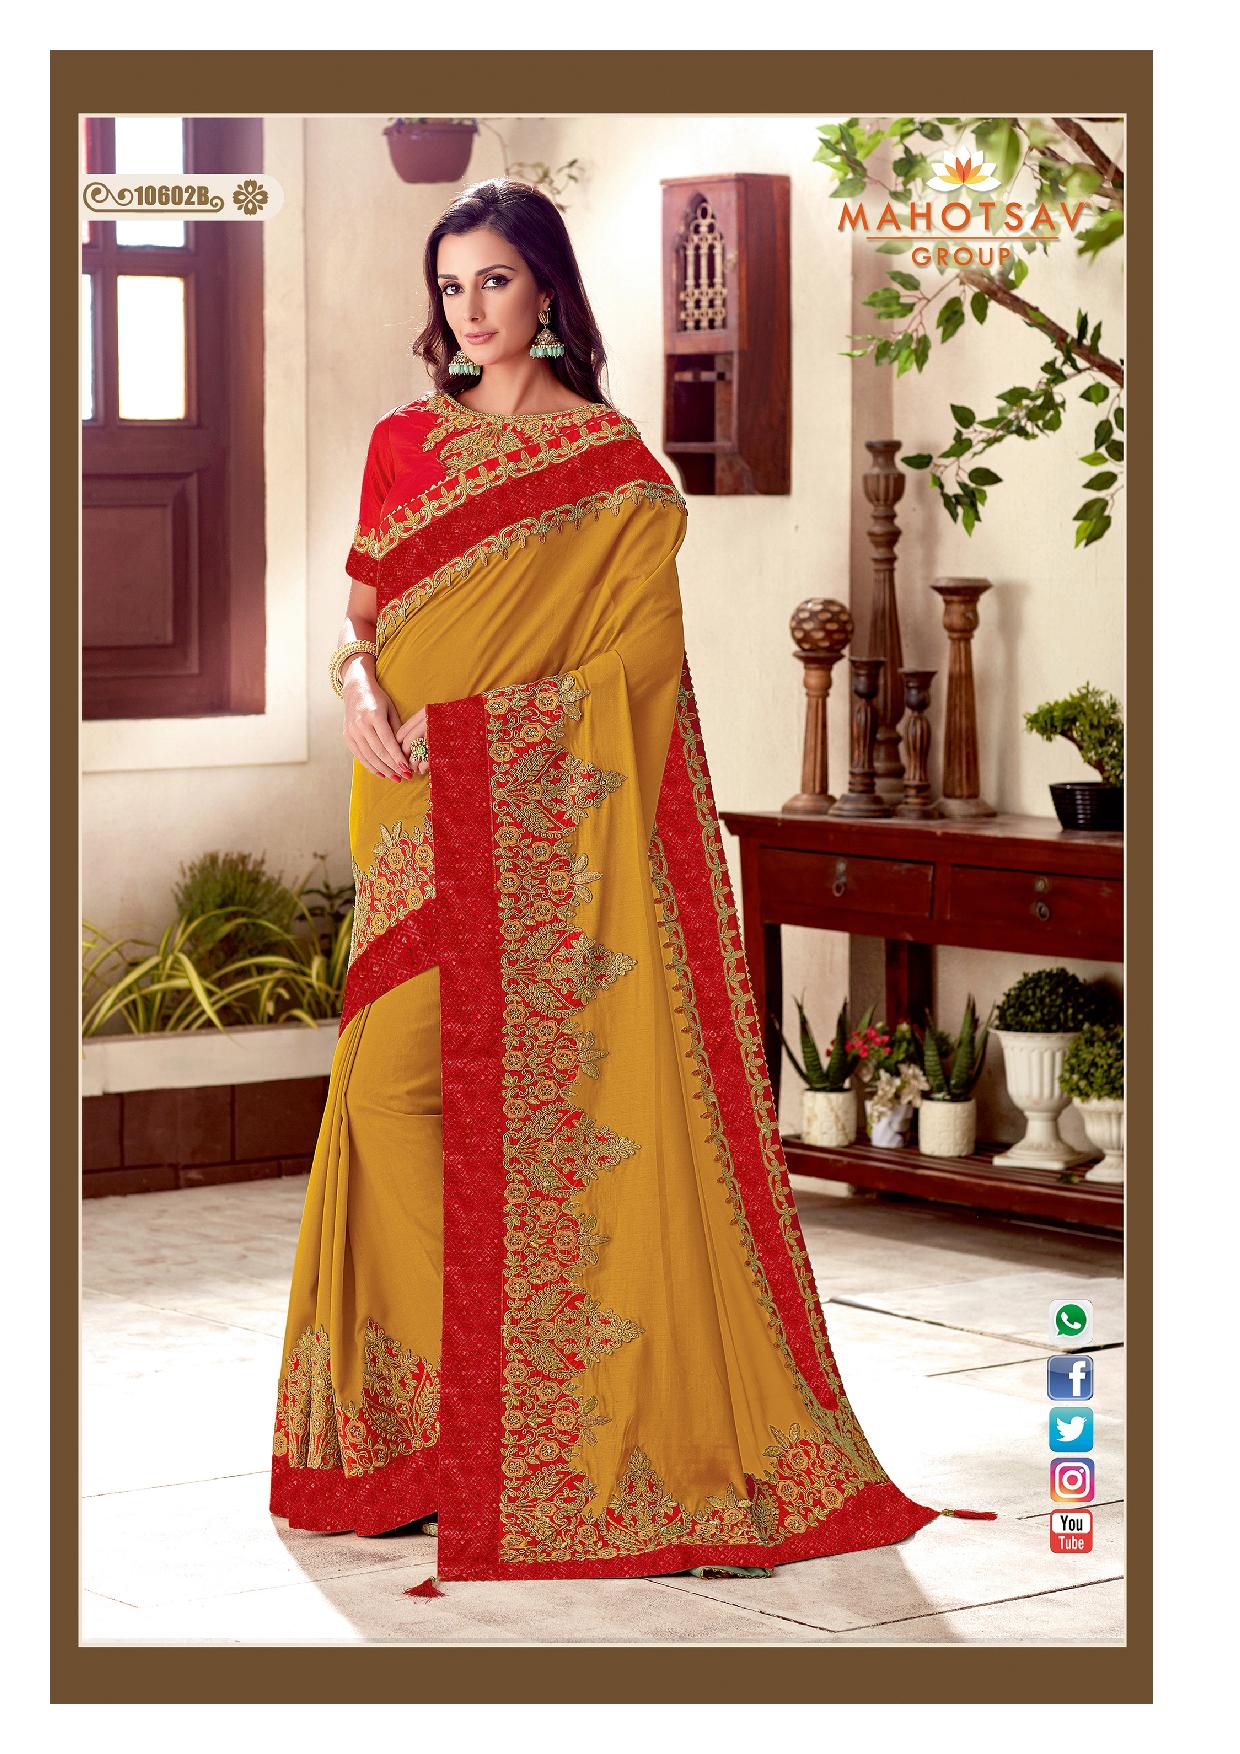 Mahotsav Presents Norita Royal Issue-31 Alankrita Premium Designer Party Wear Silk Sarees Catalog Wholesaler